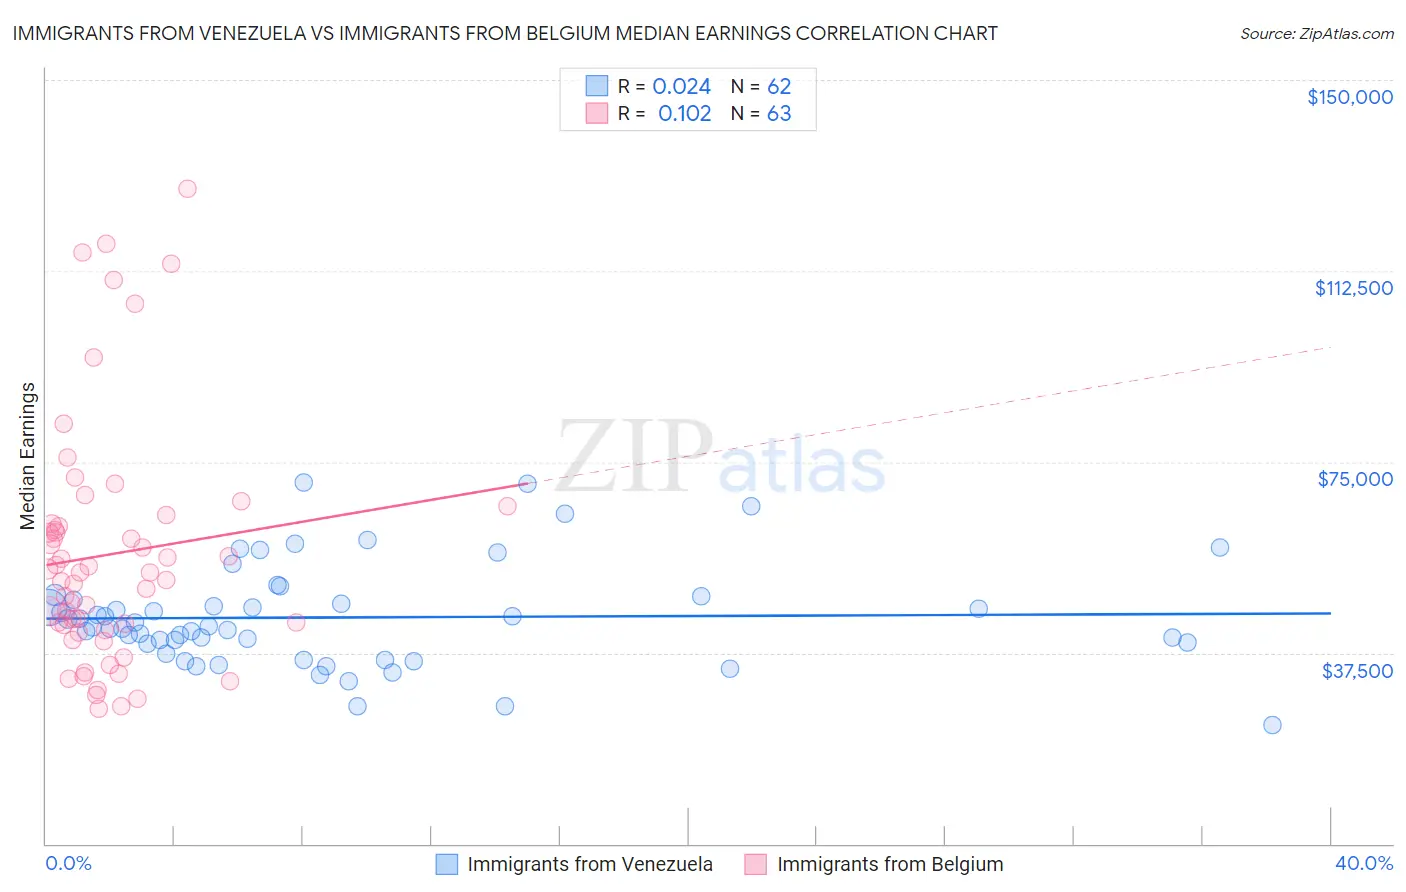 Immigrants from Venezuela vs Immigrants from Belgium Median Earnings